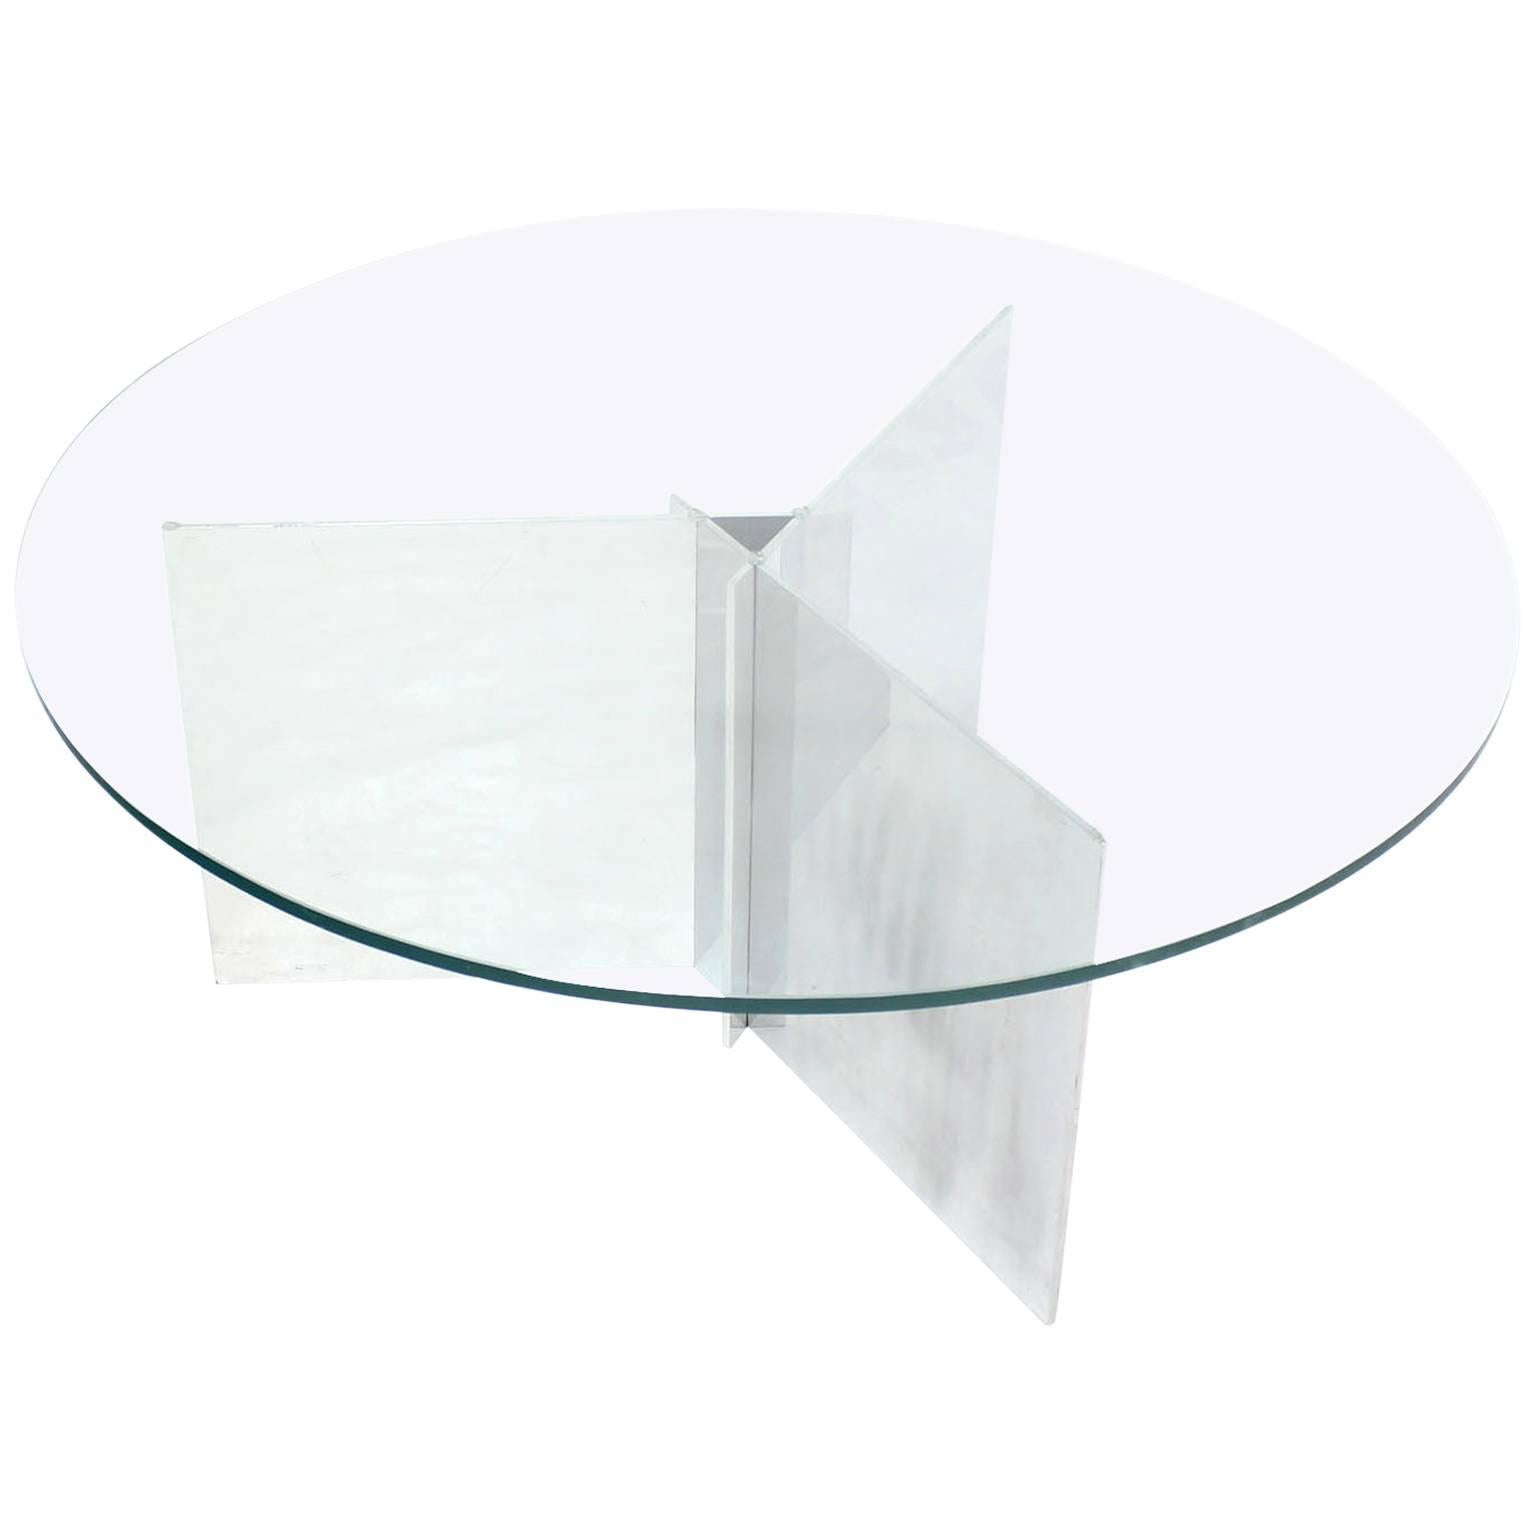 Paul Mayen for Habitat Triangular Base Round Glass Top Coffee Table